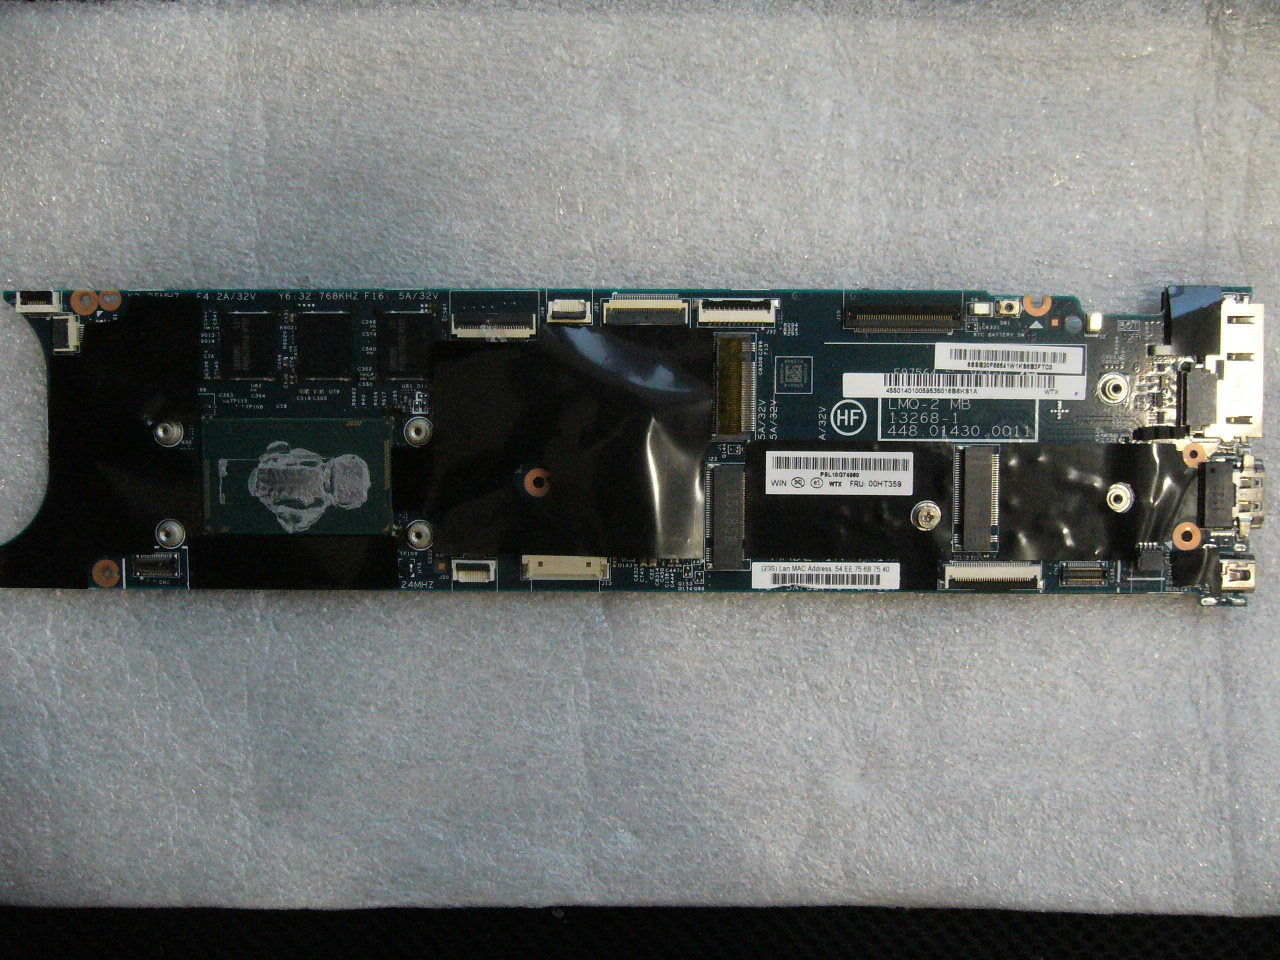 QTY 1x Lenovo Thinkpad X1C Gen3 laptop motherboard intel i5-5300U 8GB 00HT359 - Click Image to Close